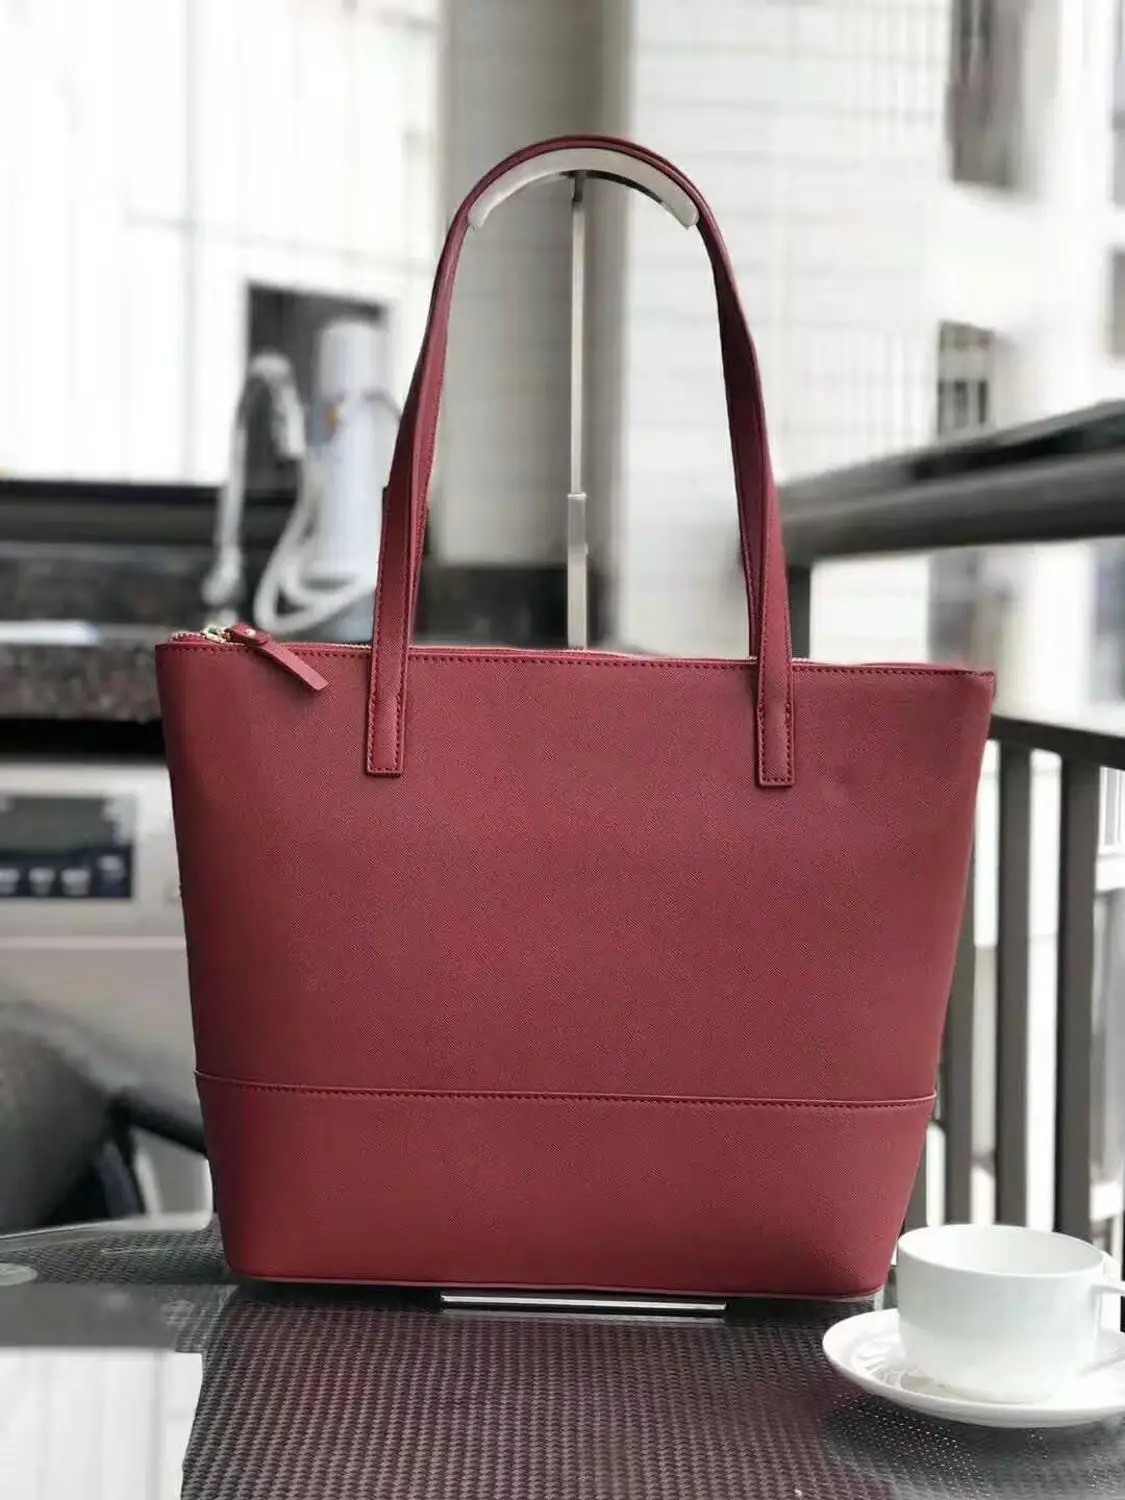 Popular fashion European and American simple horizontal style large shopping bag shoulder bag women handbag casual bag